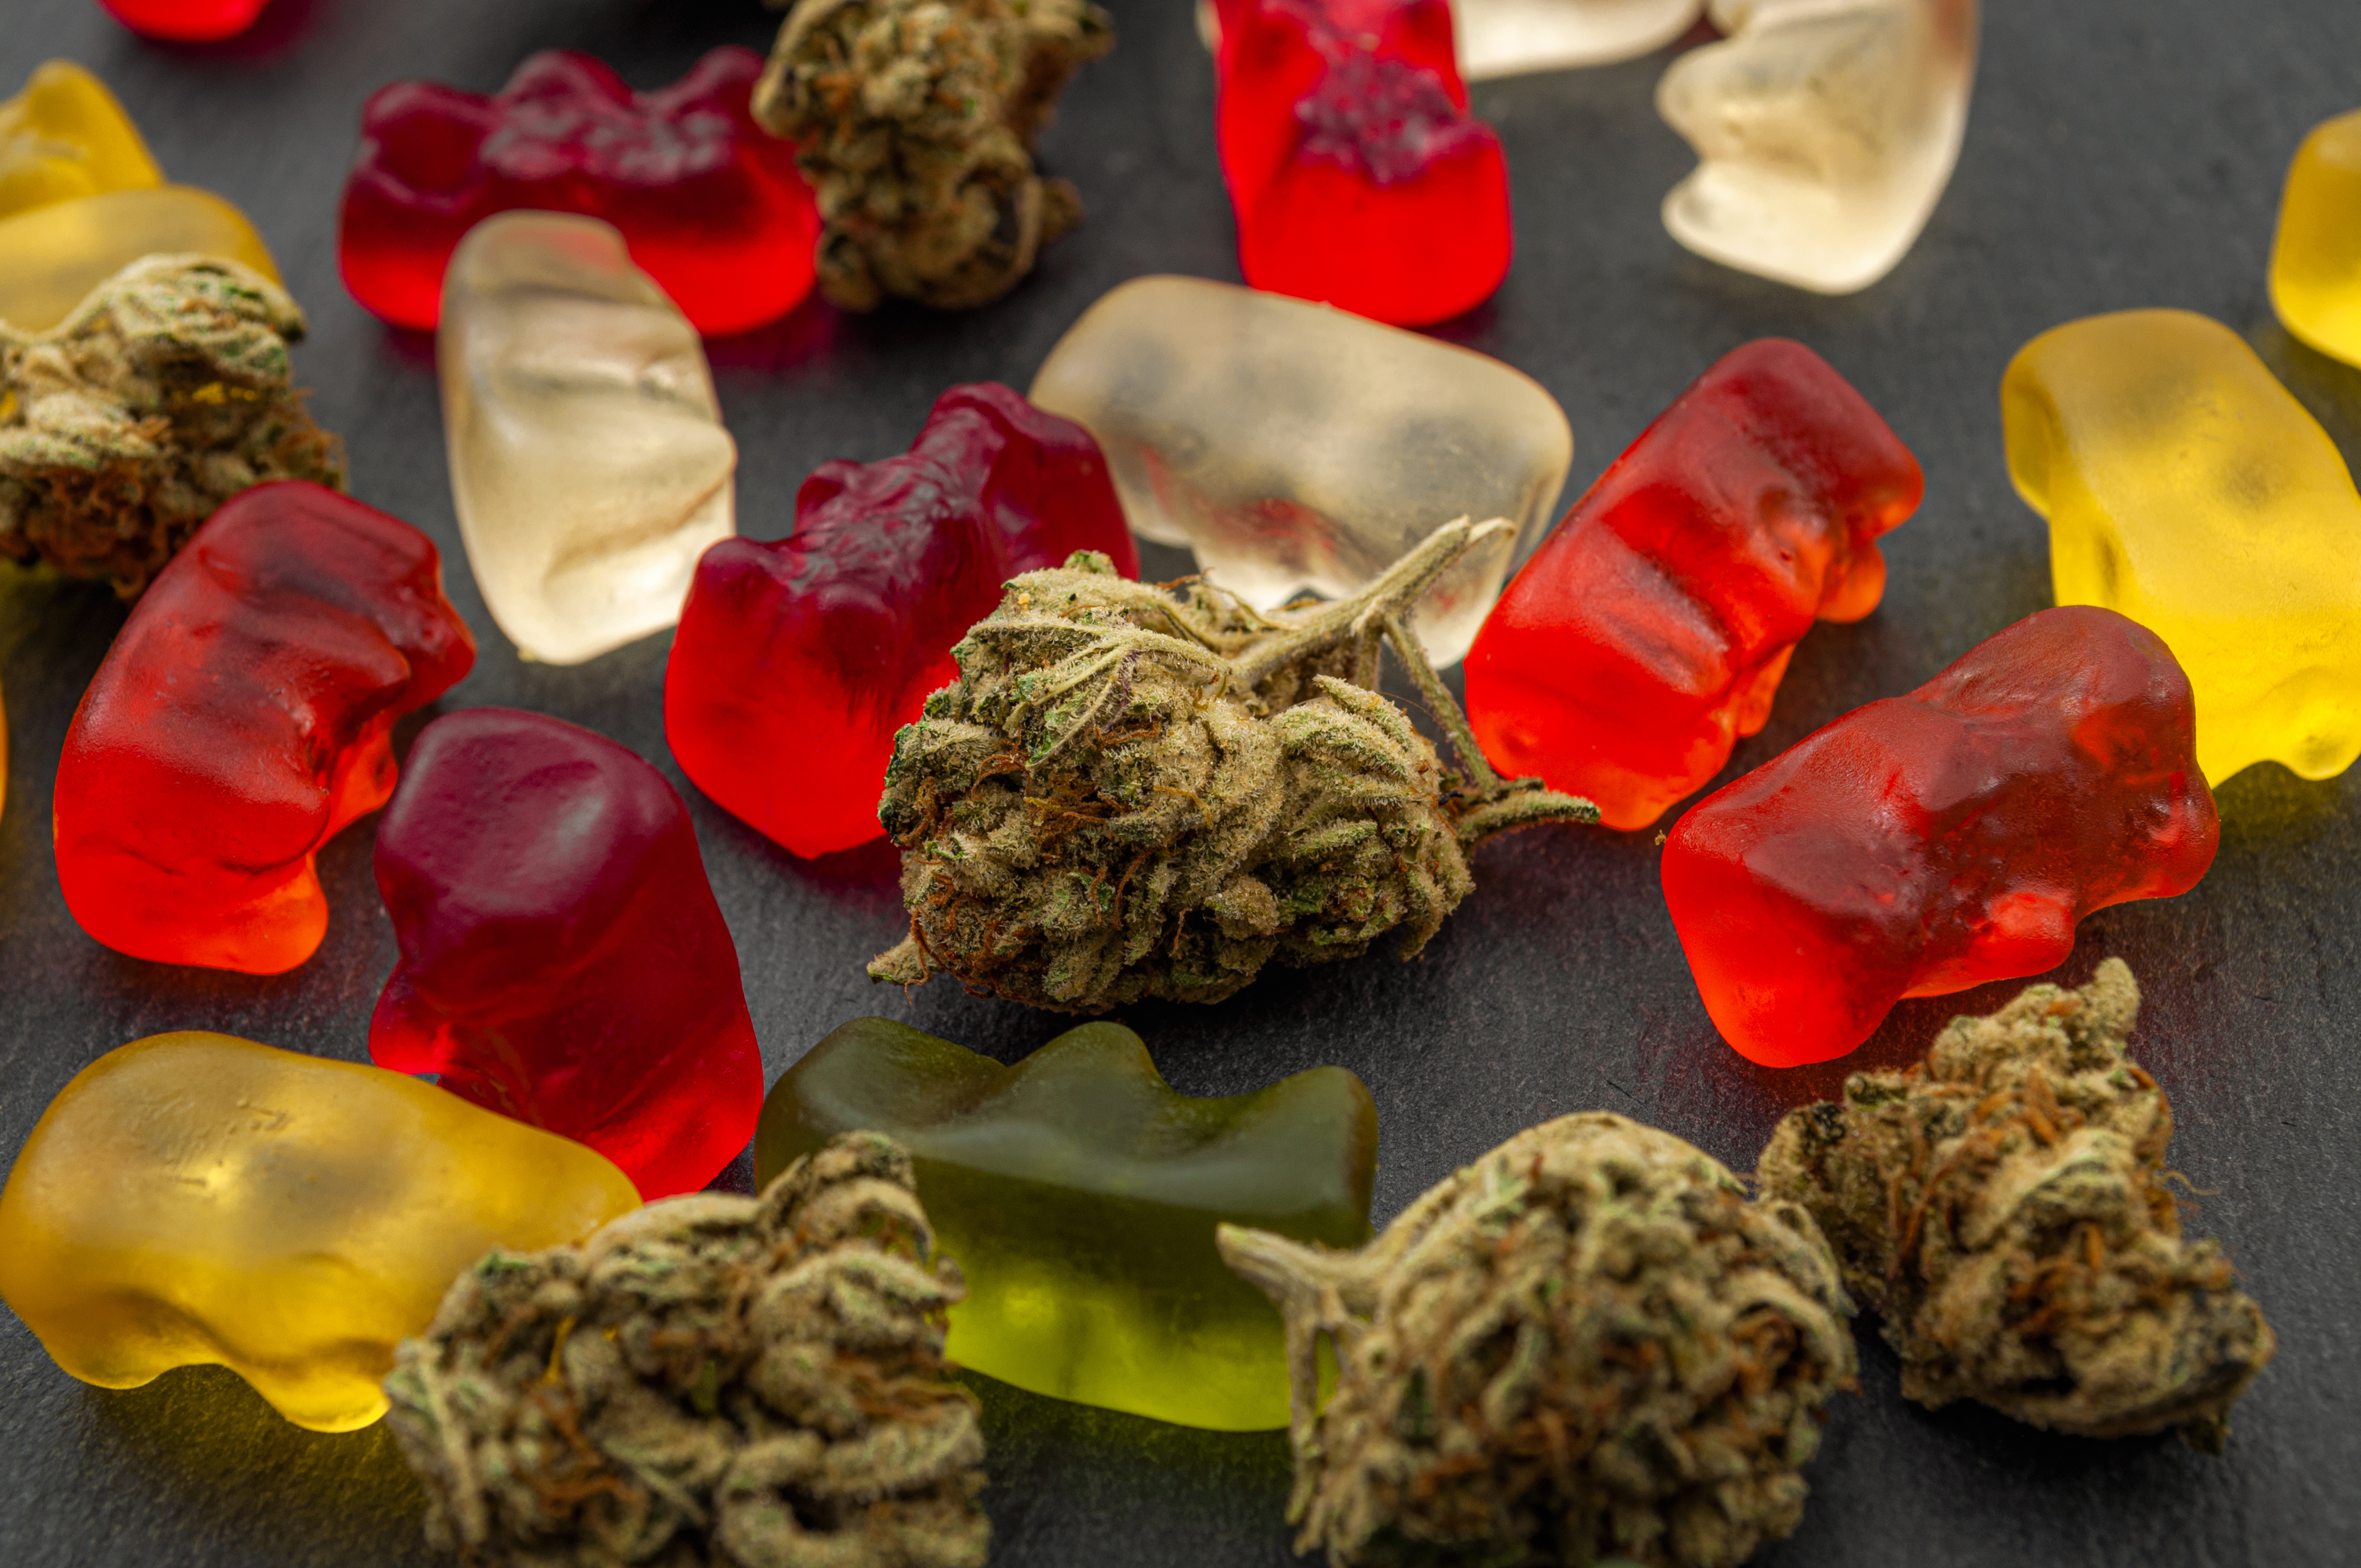 DEA considers reclassifying marijuana to Schedule 3, for less-dangerous substances